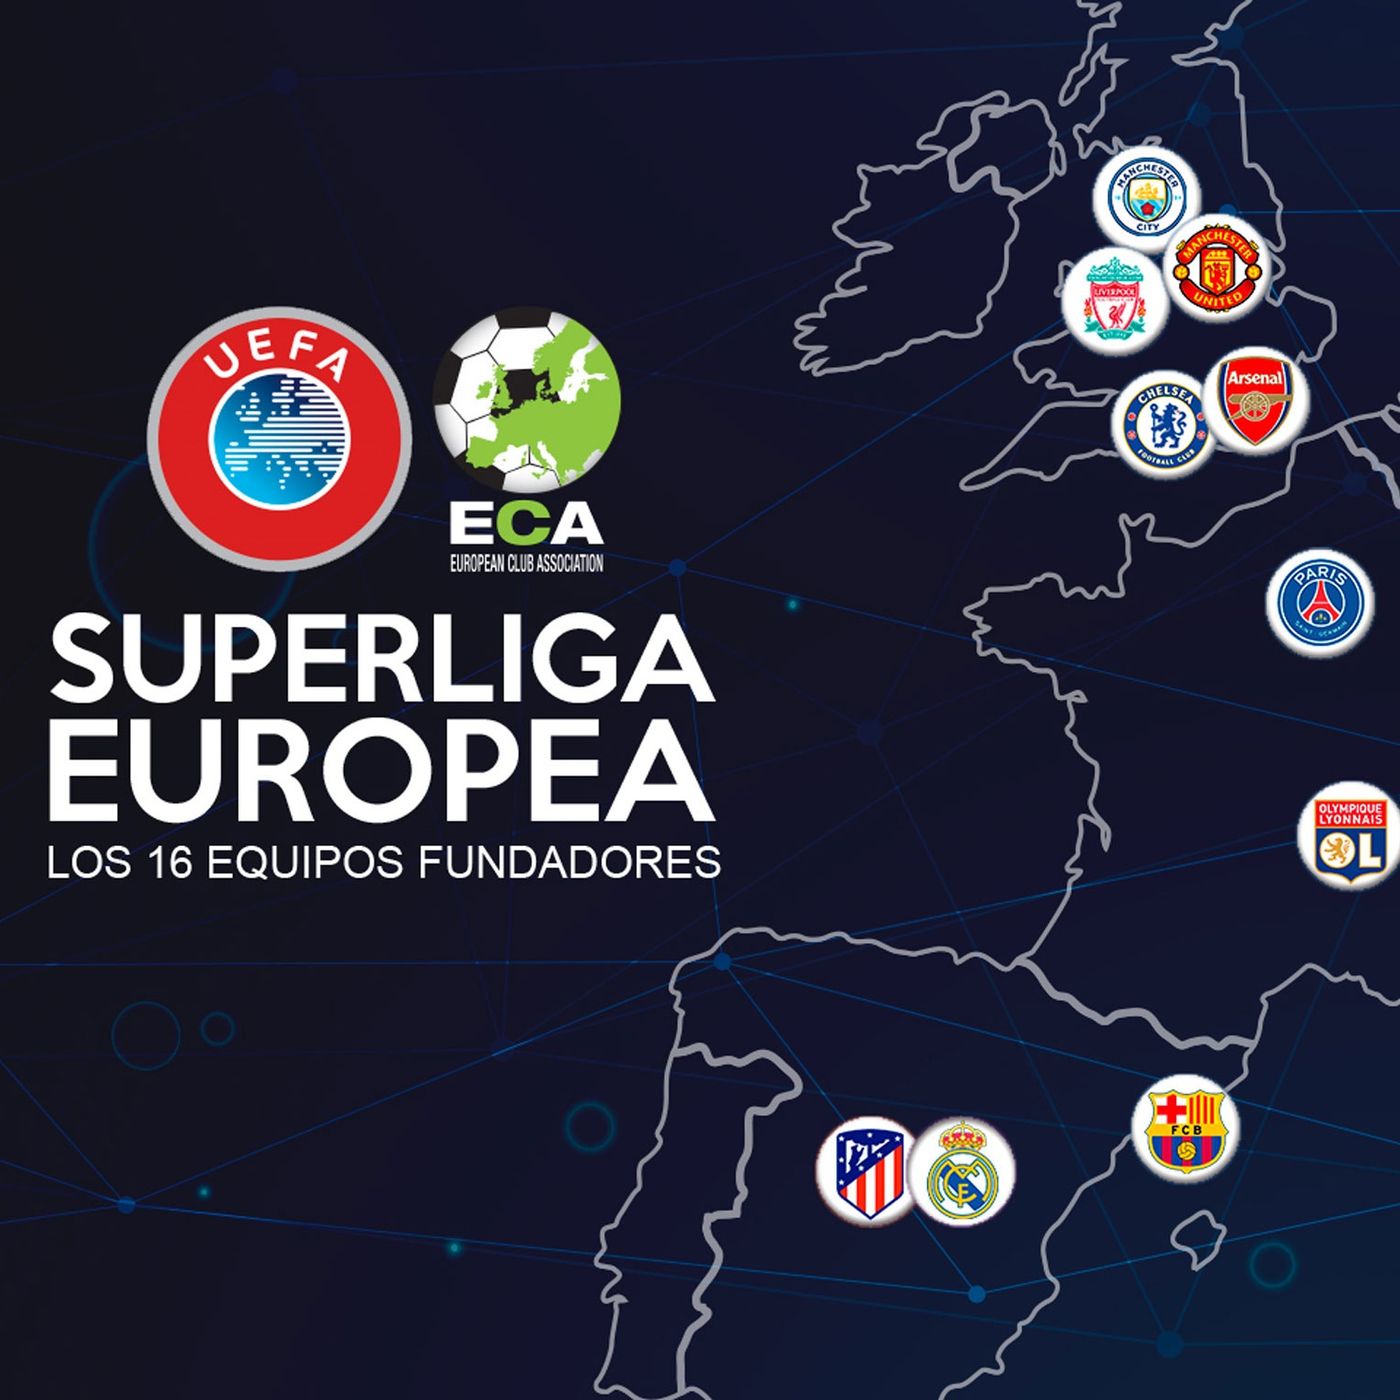 Primer round de la Superliga Europea, con Isaac Lluch